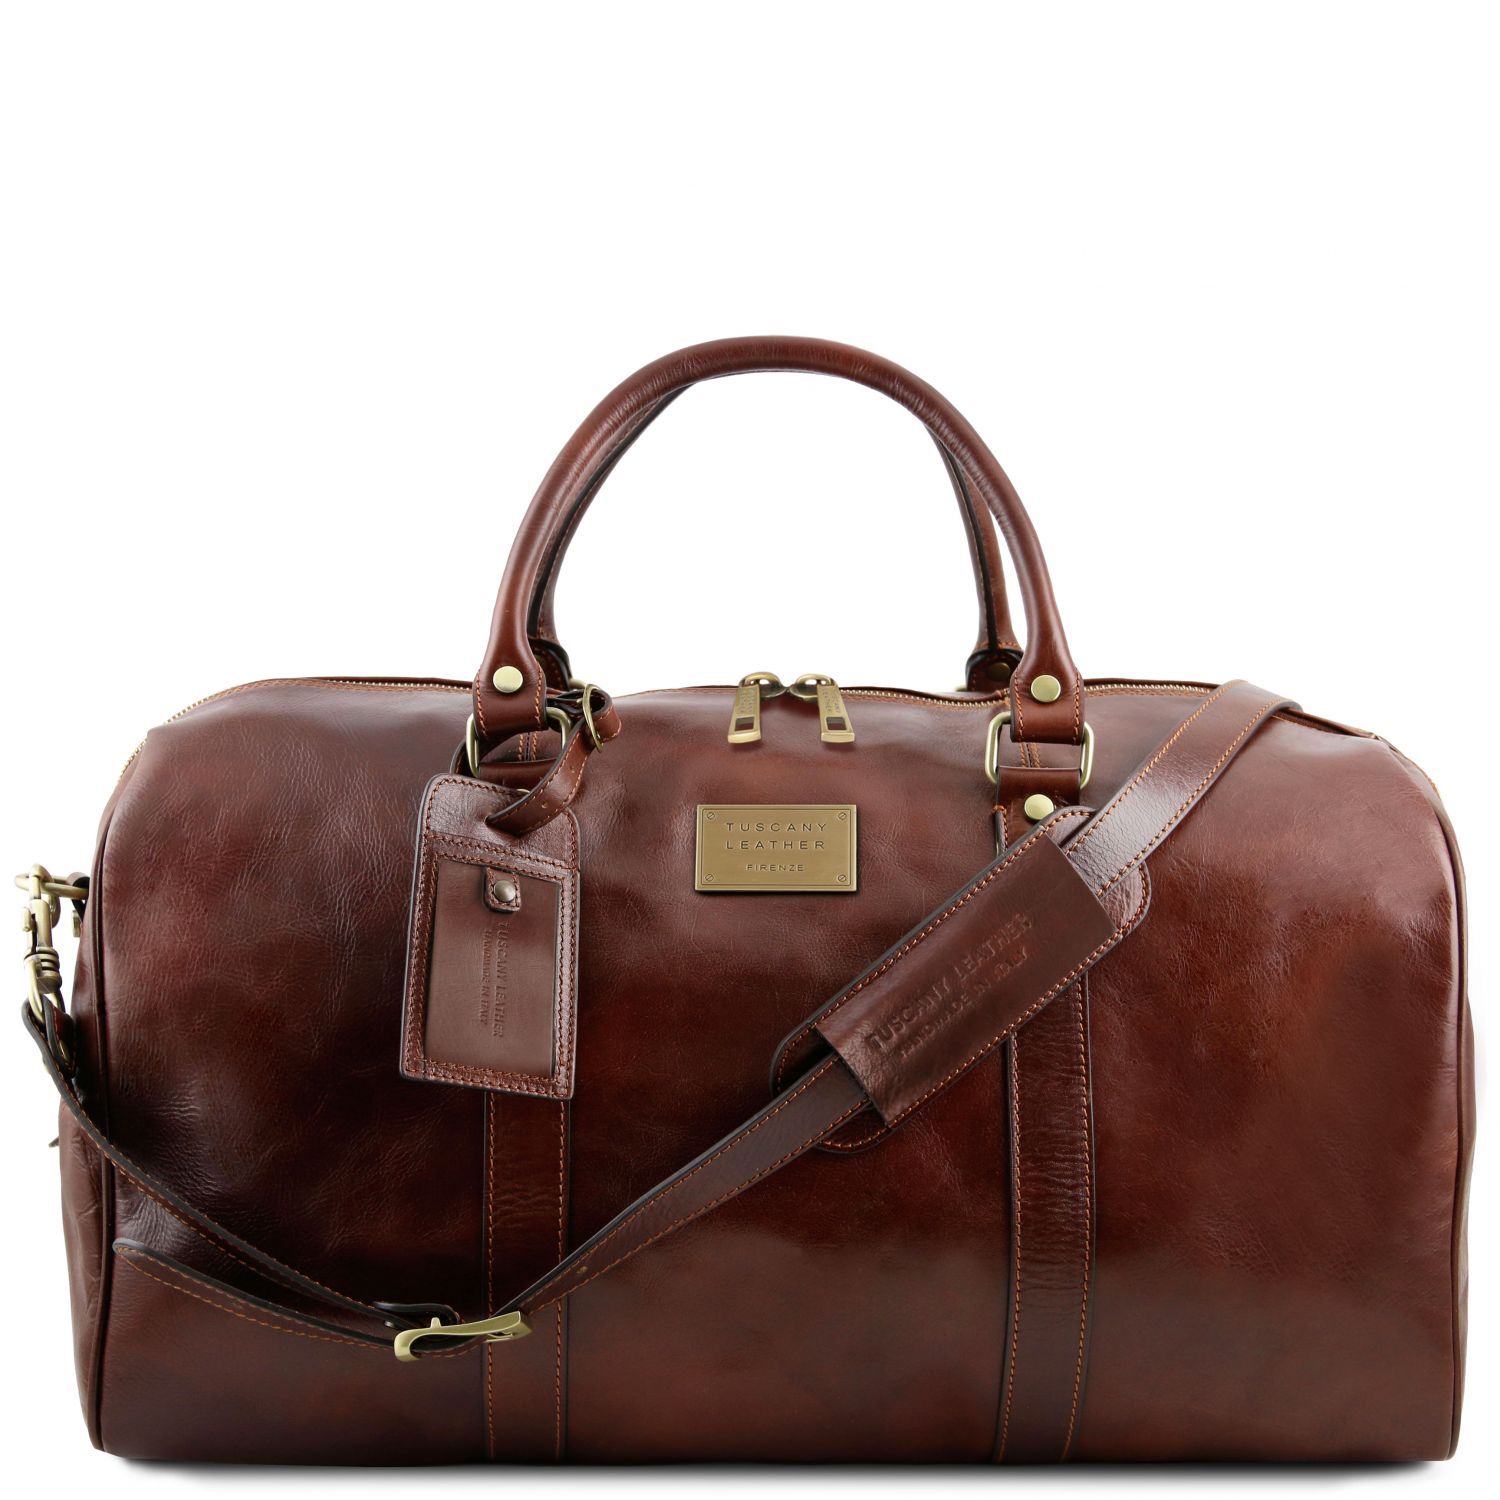 Italian Leather Travel Bags, 100% full grain Italian leather